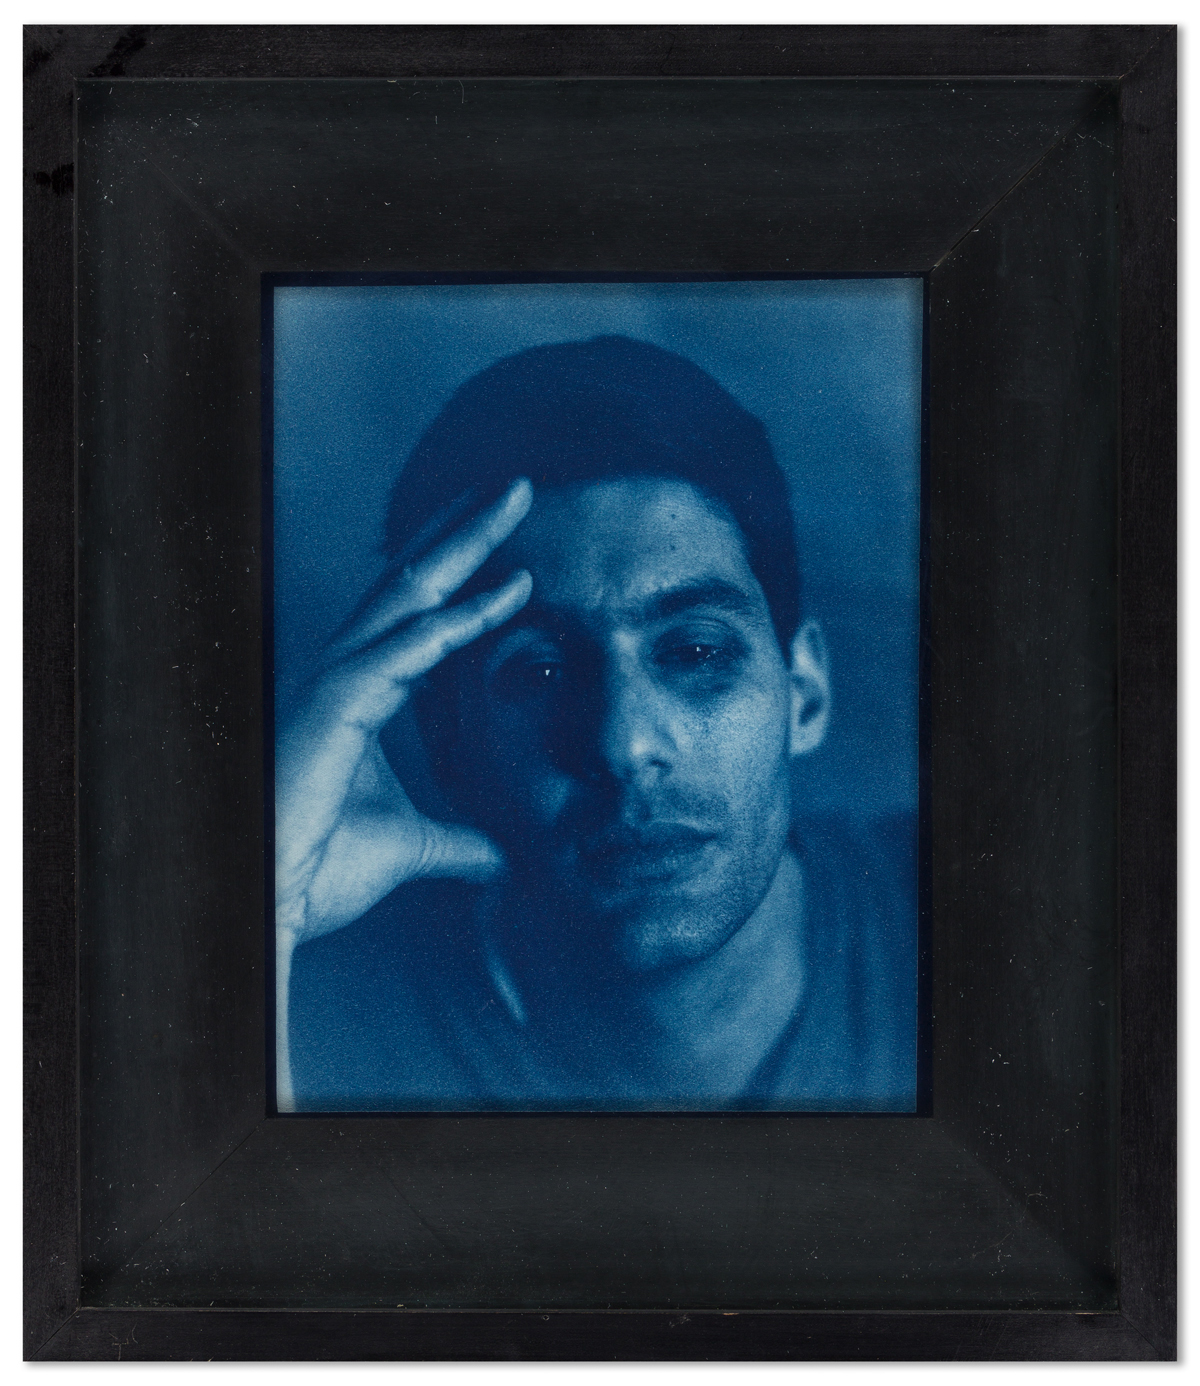 JOHN PATRICK DUGDALE (1960 - ) Self-portrait with Black Eye.